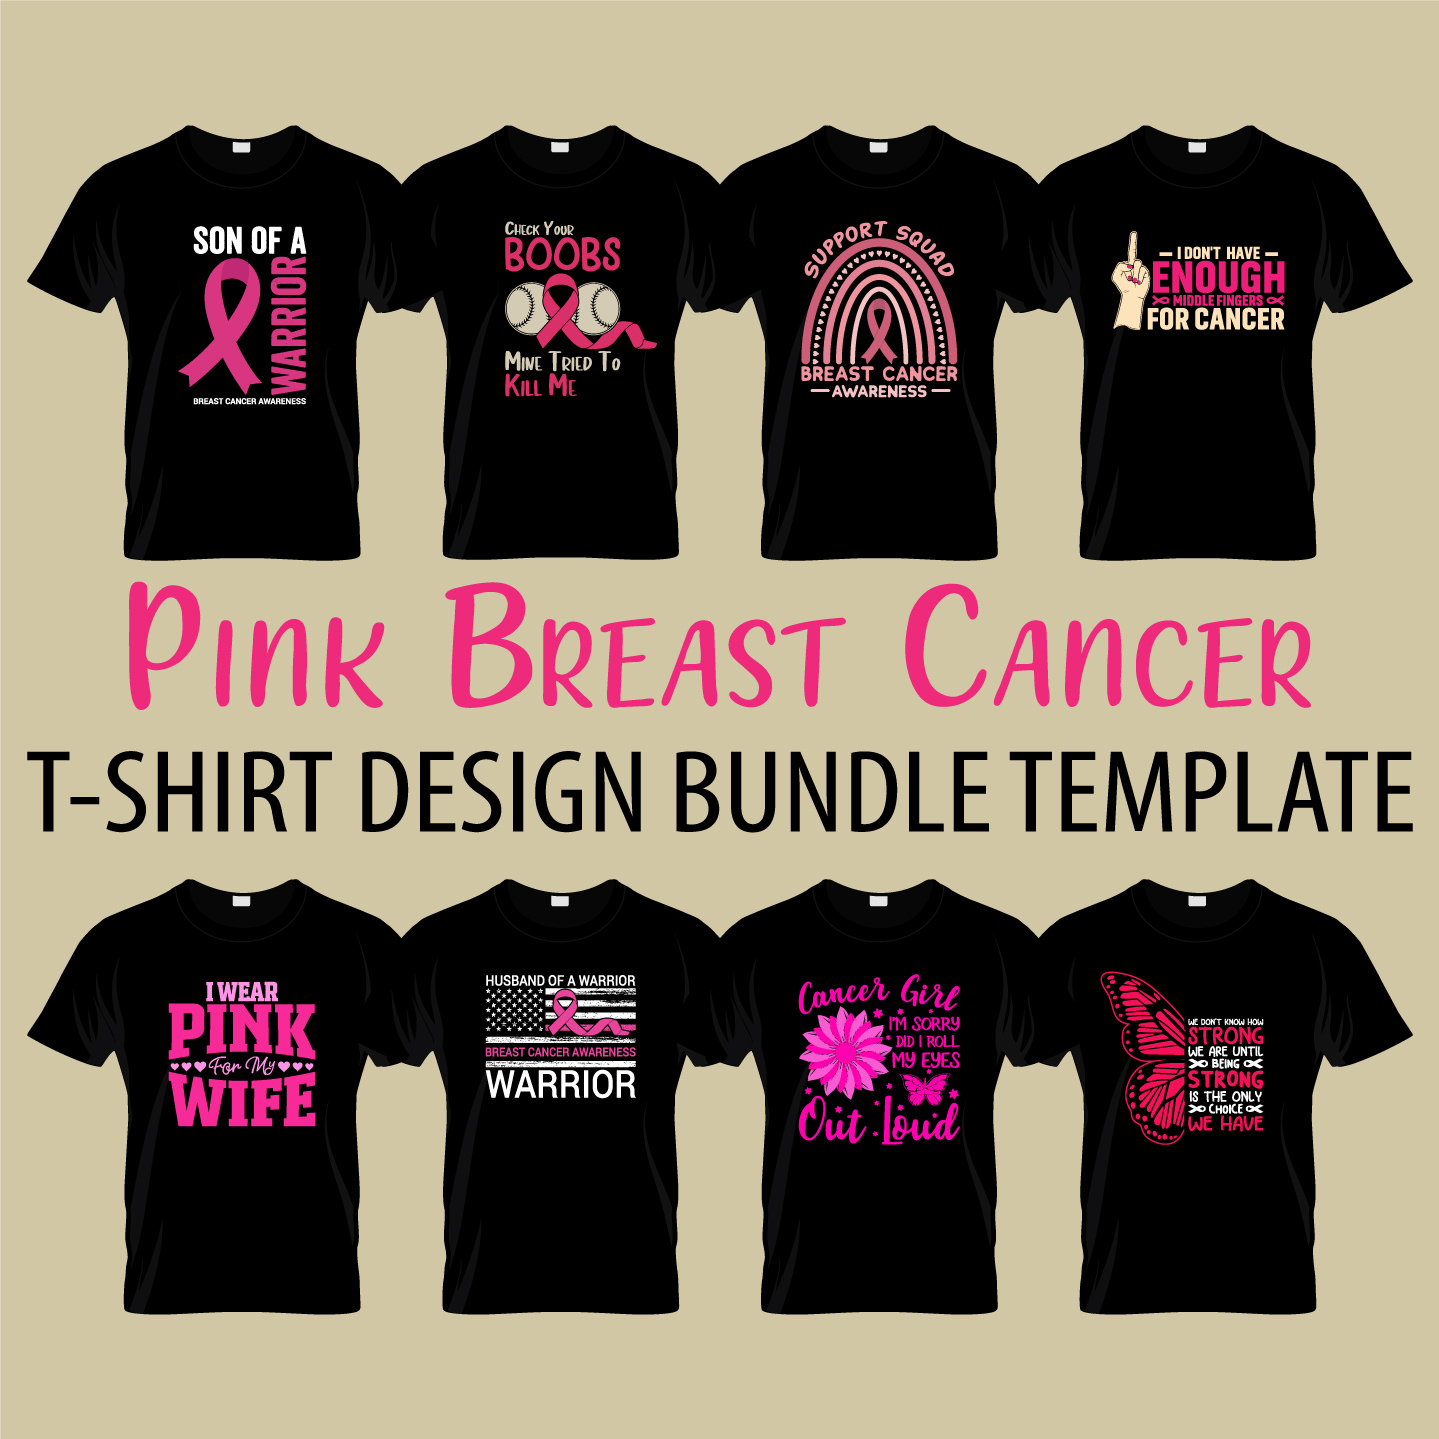 Pink Breast Cancer T-shirt Designs Bundle preview image.